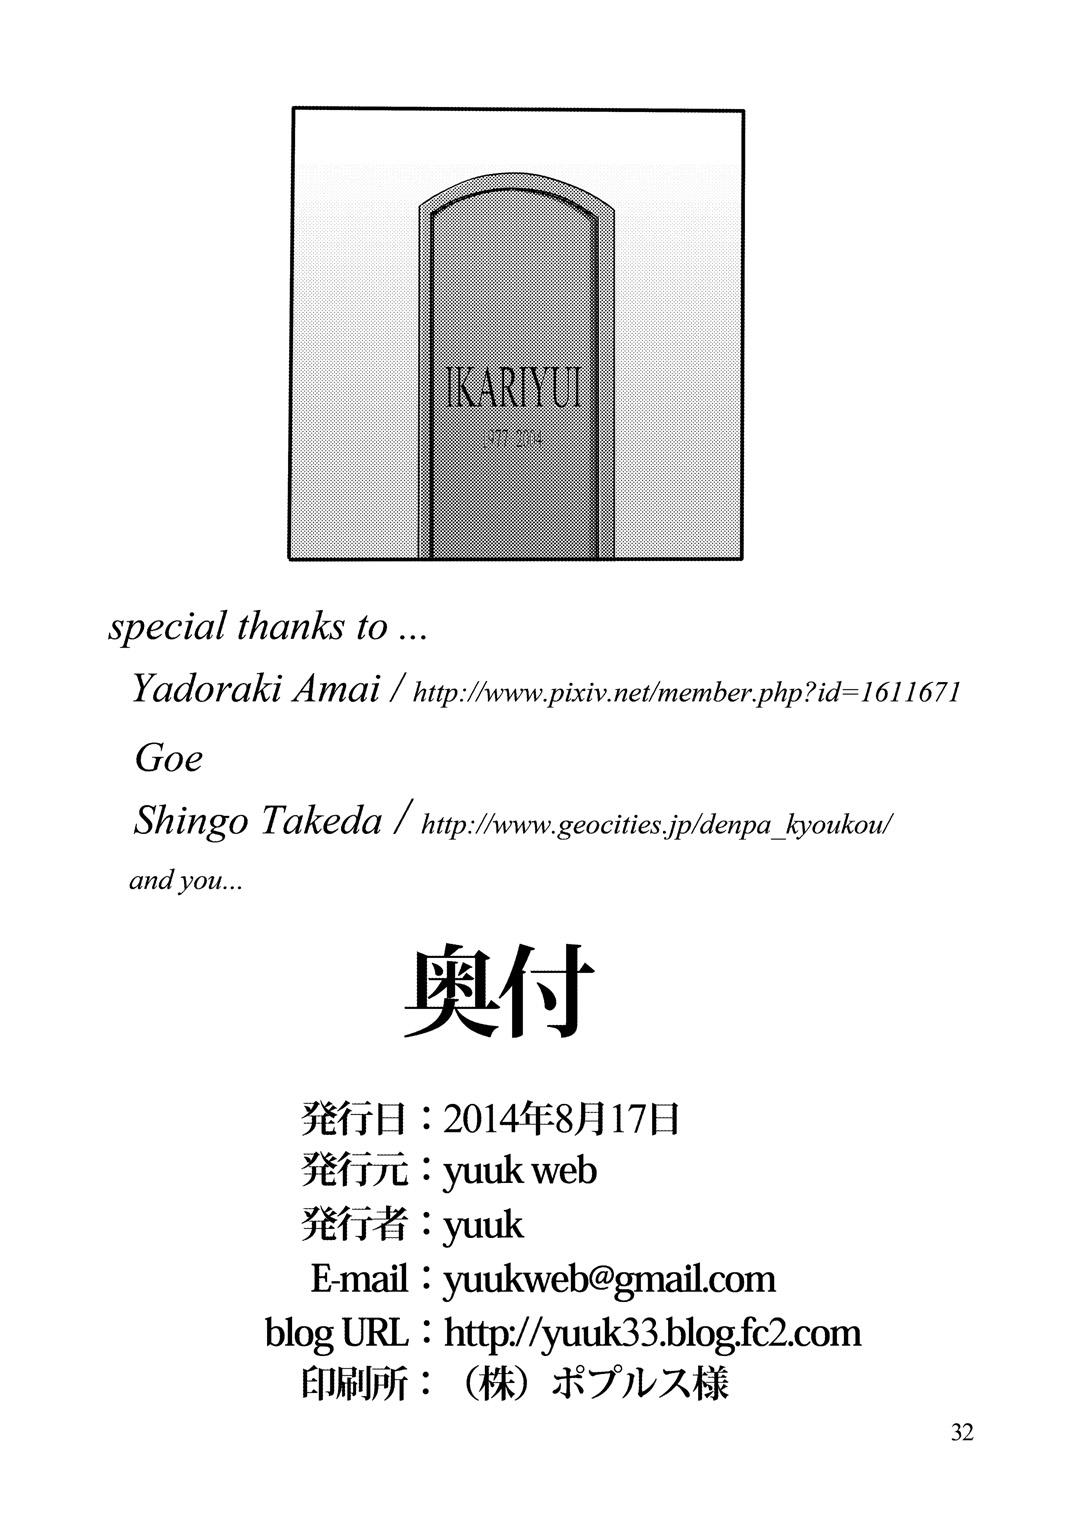 Motel Yui Ikari 10th Anniversary Book - beyond the time - Neon genesis evangelion Massage - Page 33